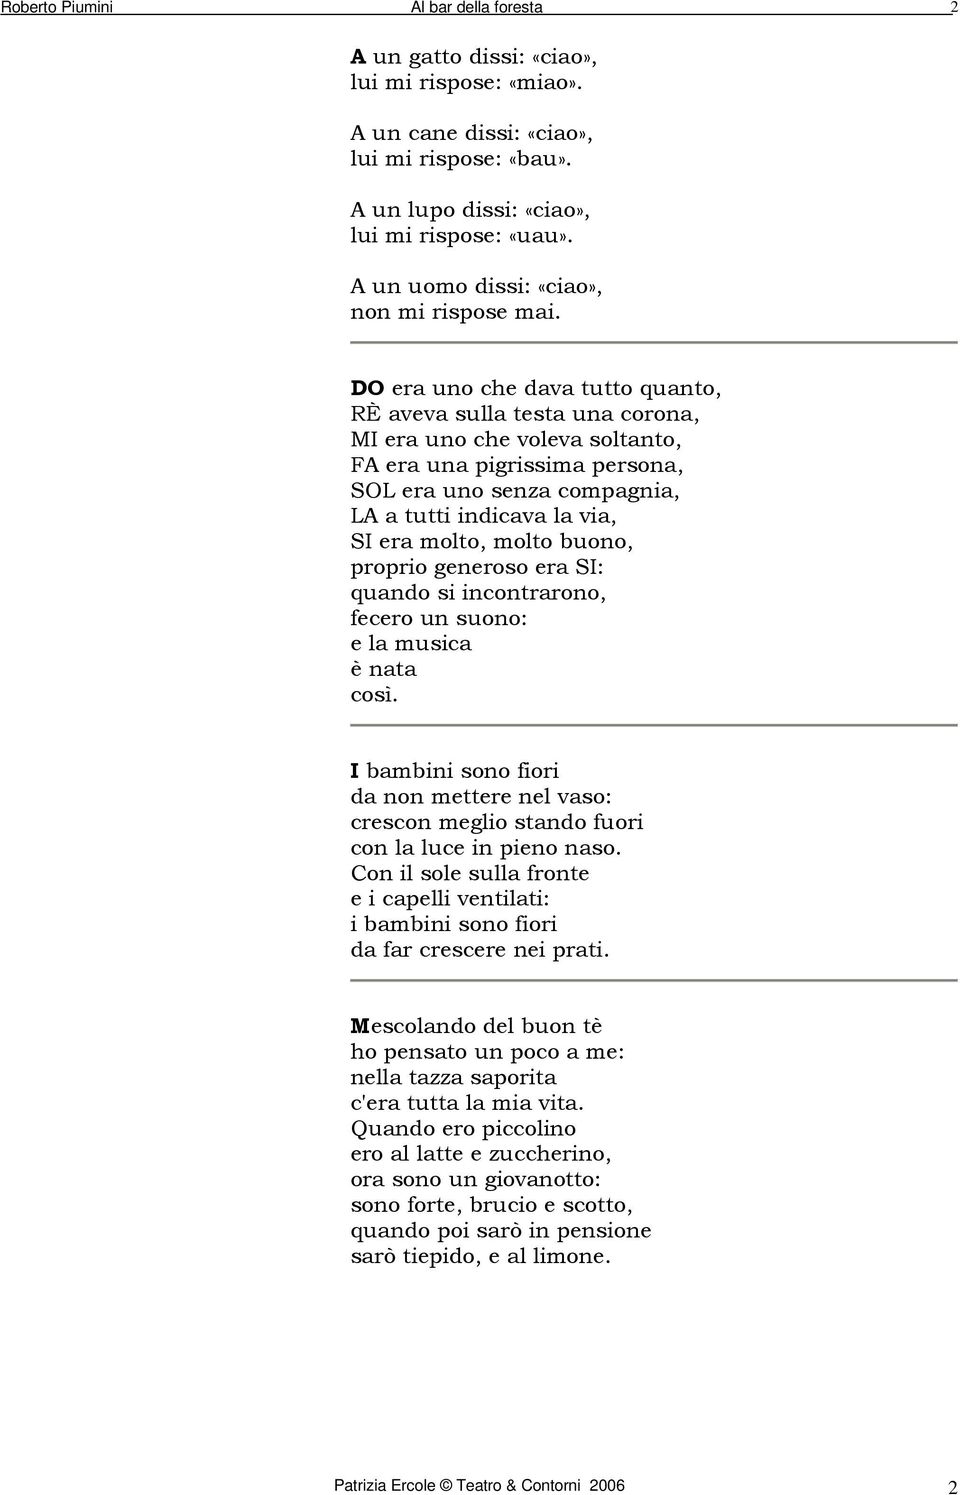 Poesie Di Natale Piumini.Poesie Di Roberto Piumini Pdf Free Download